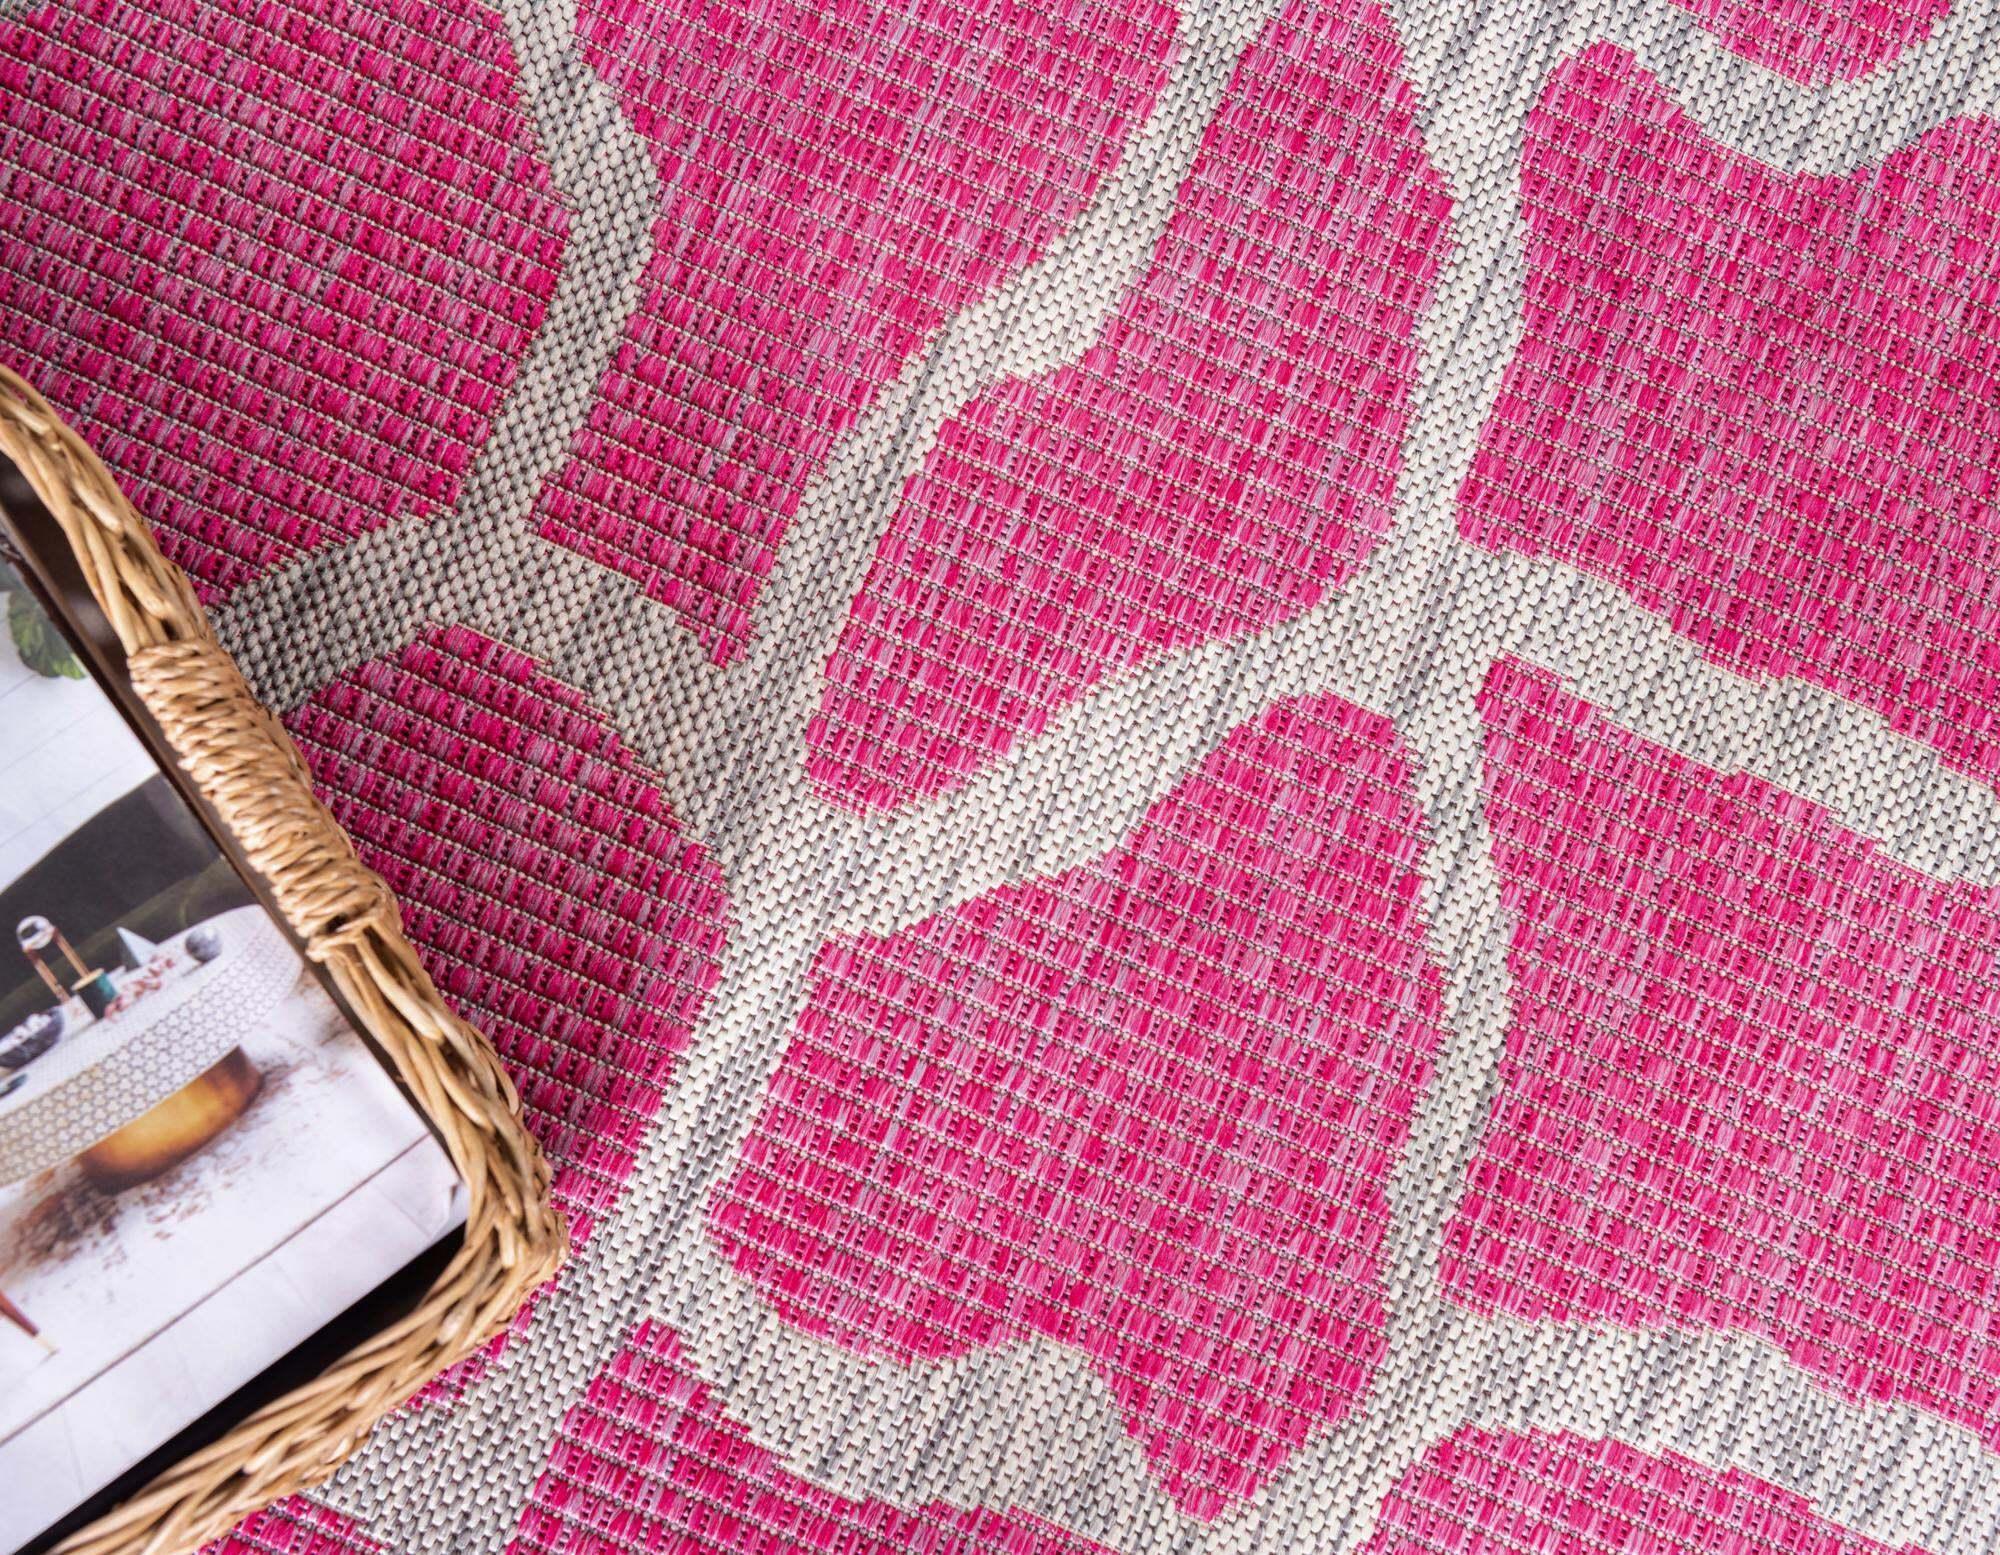 Unique Loom Outdoor Rugs - Outdoor Safari Animal Print Rectangular 8x11 Rug Pink & Gray